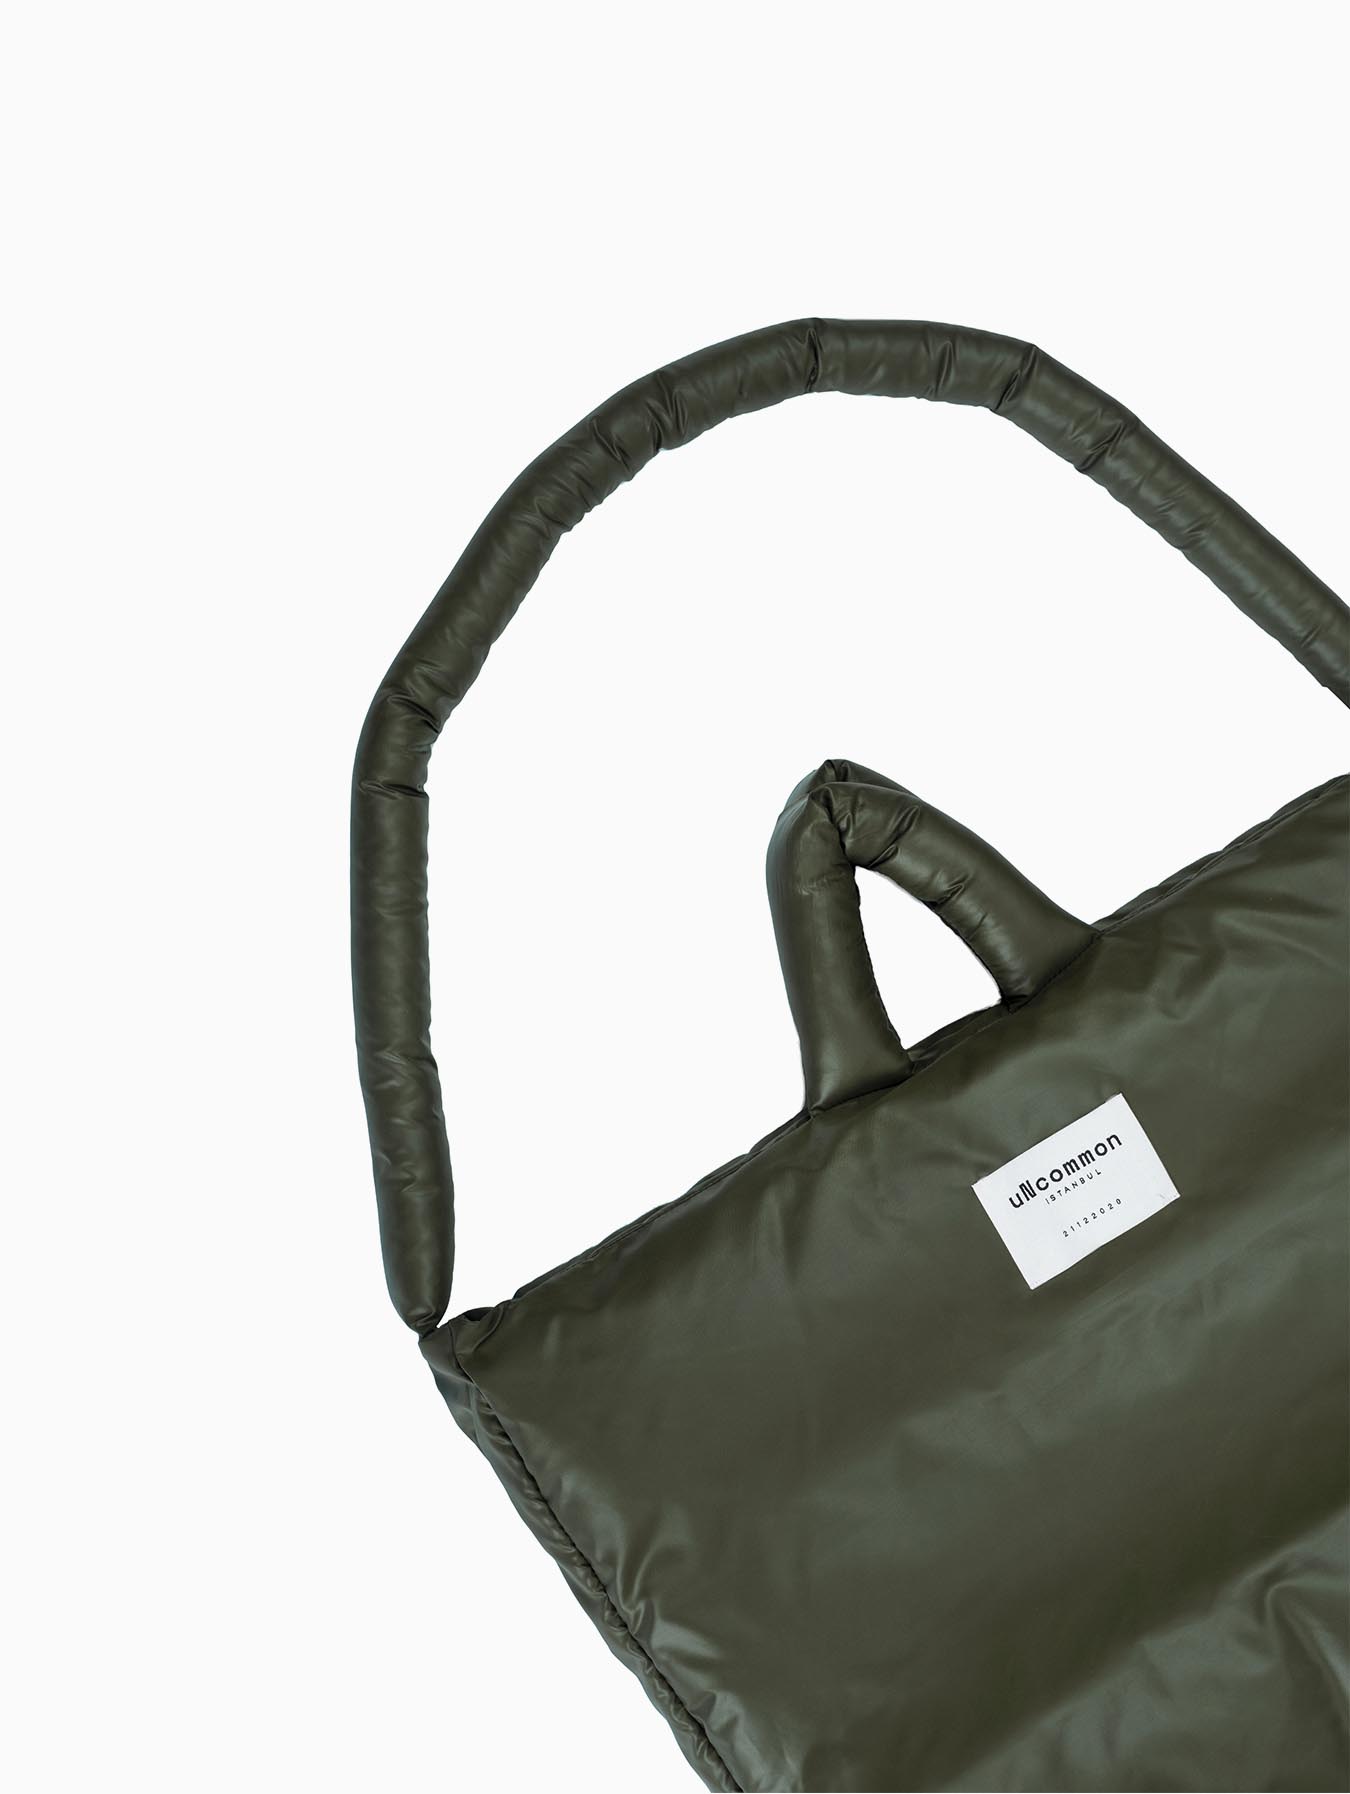  uNcommon Istanbul - Puffy Tote Bag Khaki